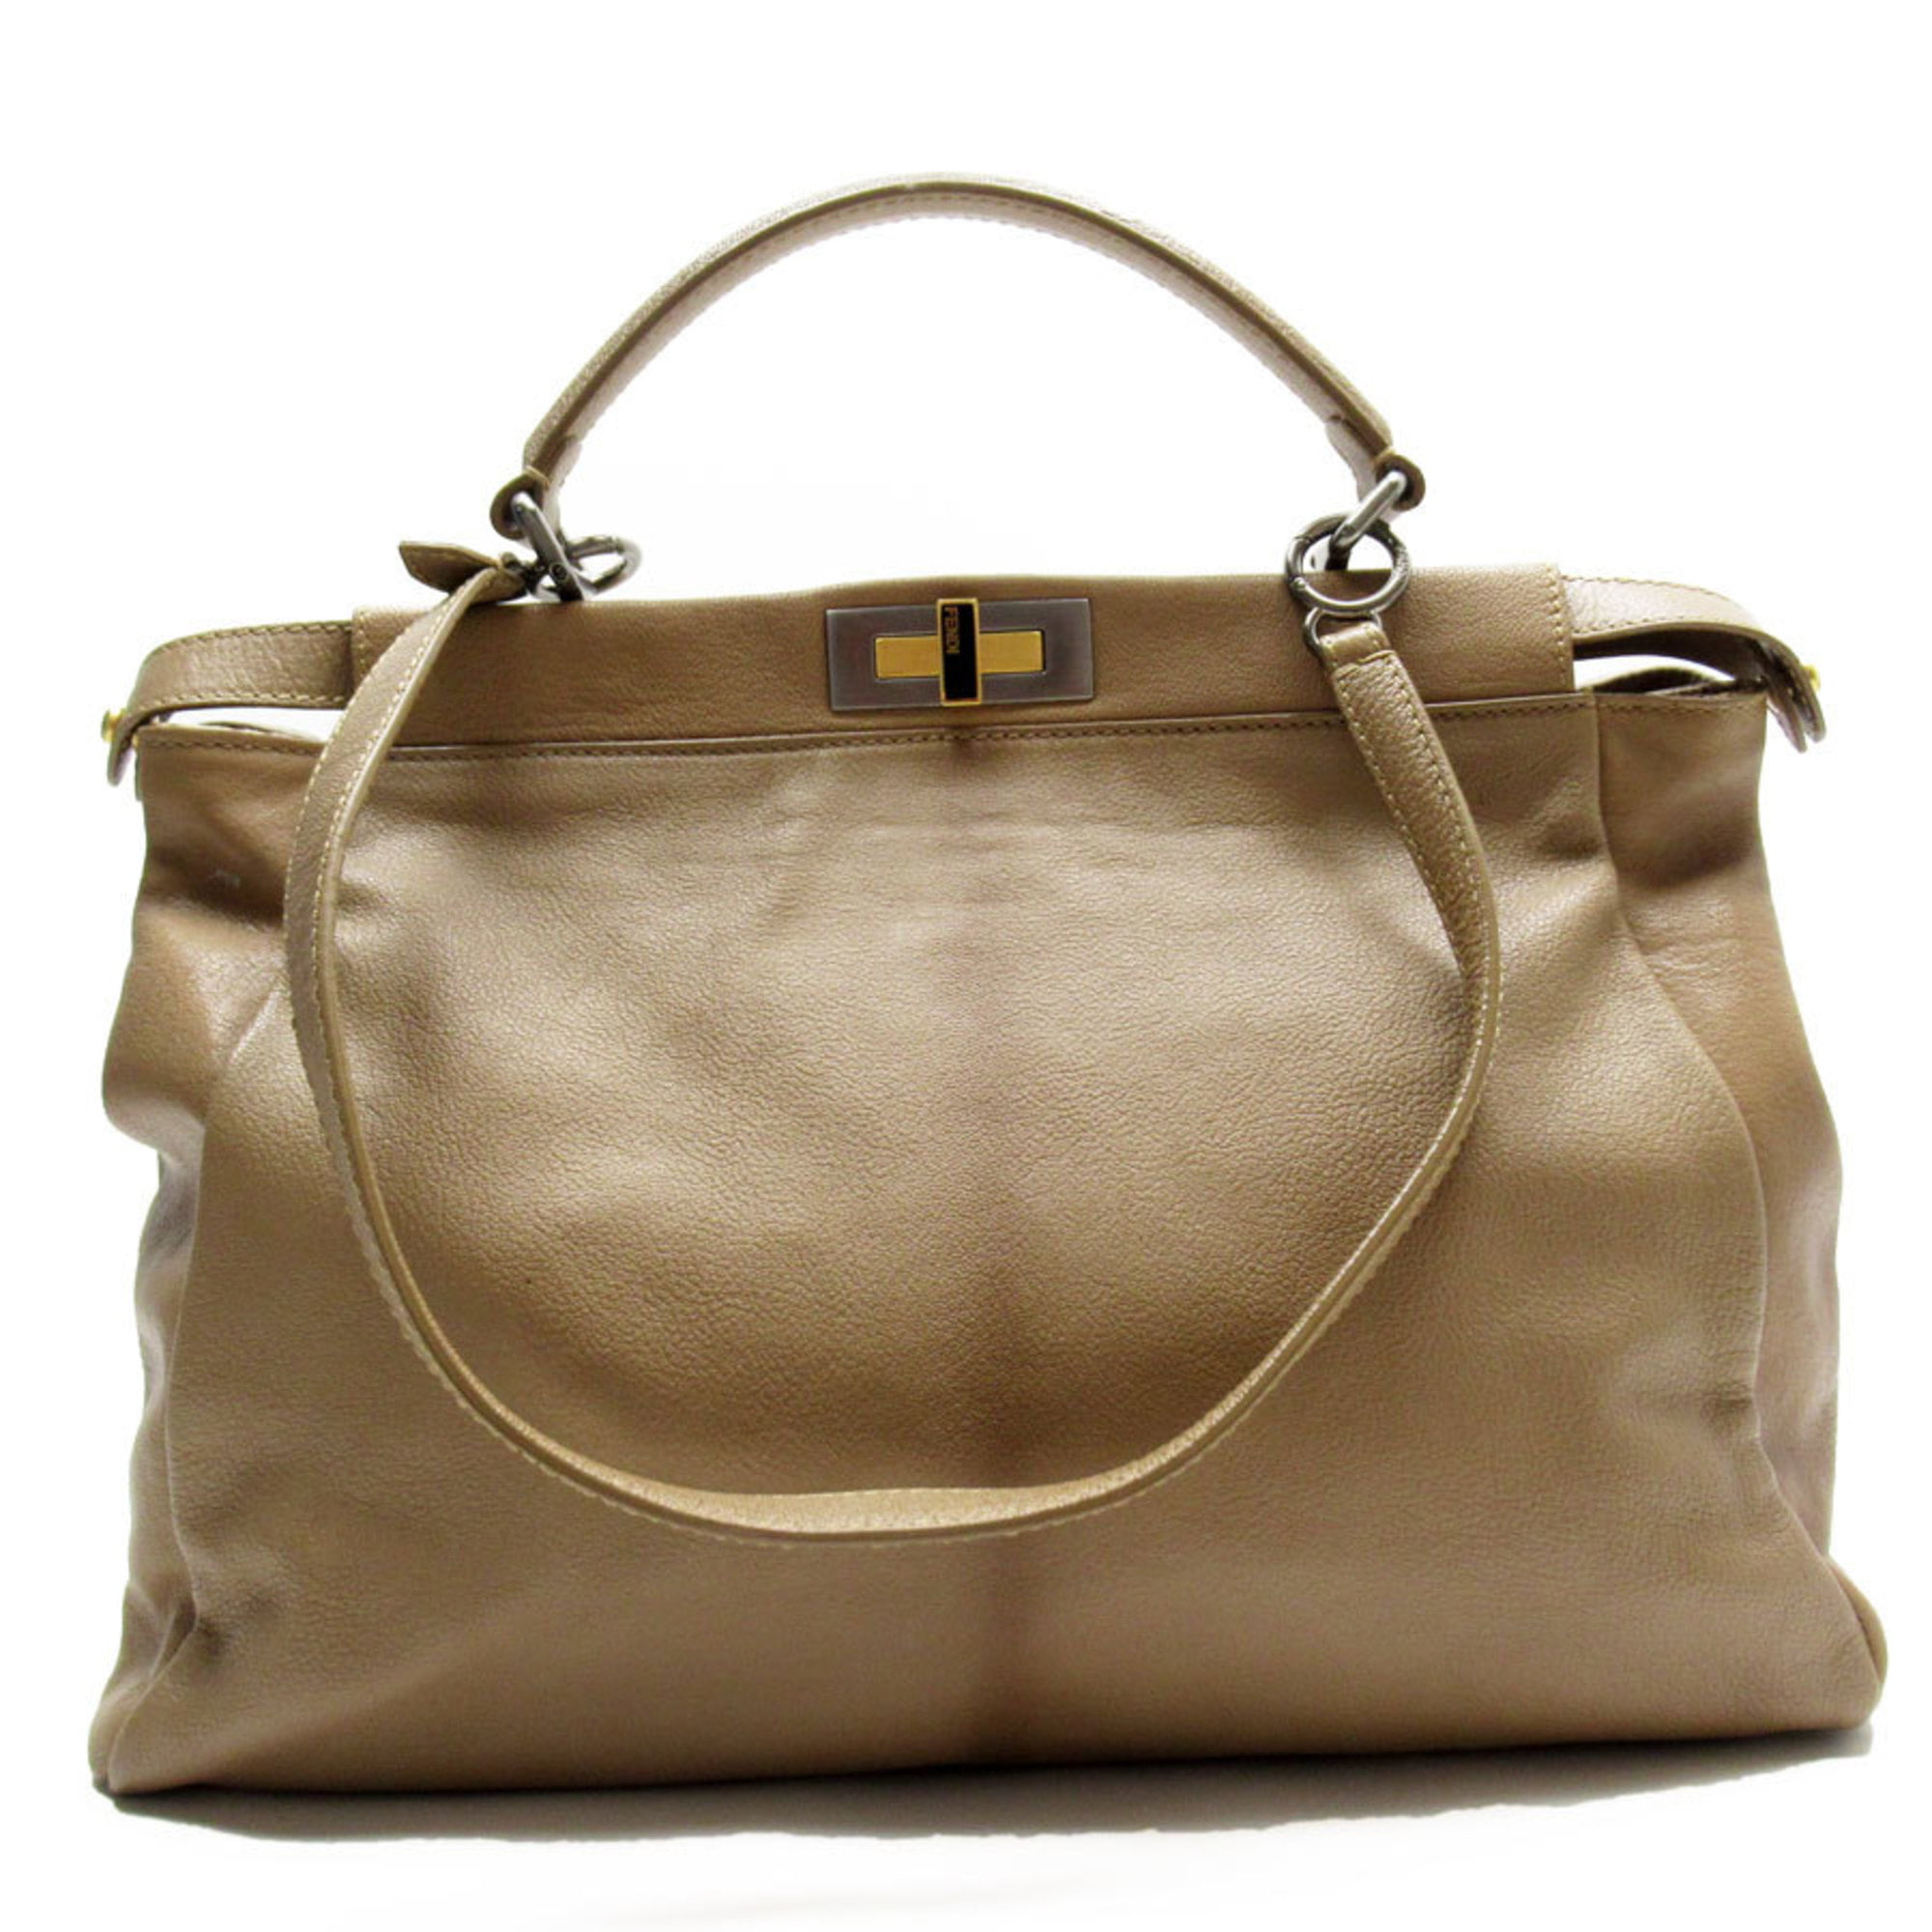 Fendi Tote Bag Brown Striped Women Handbag Purse | eBay